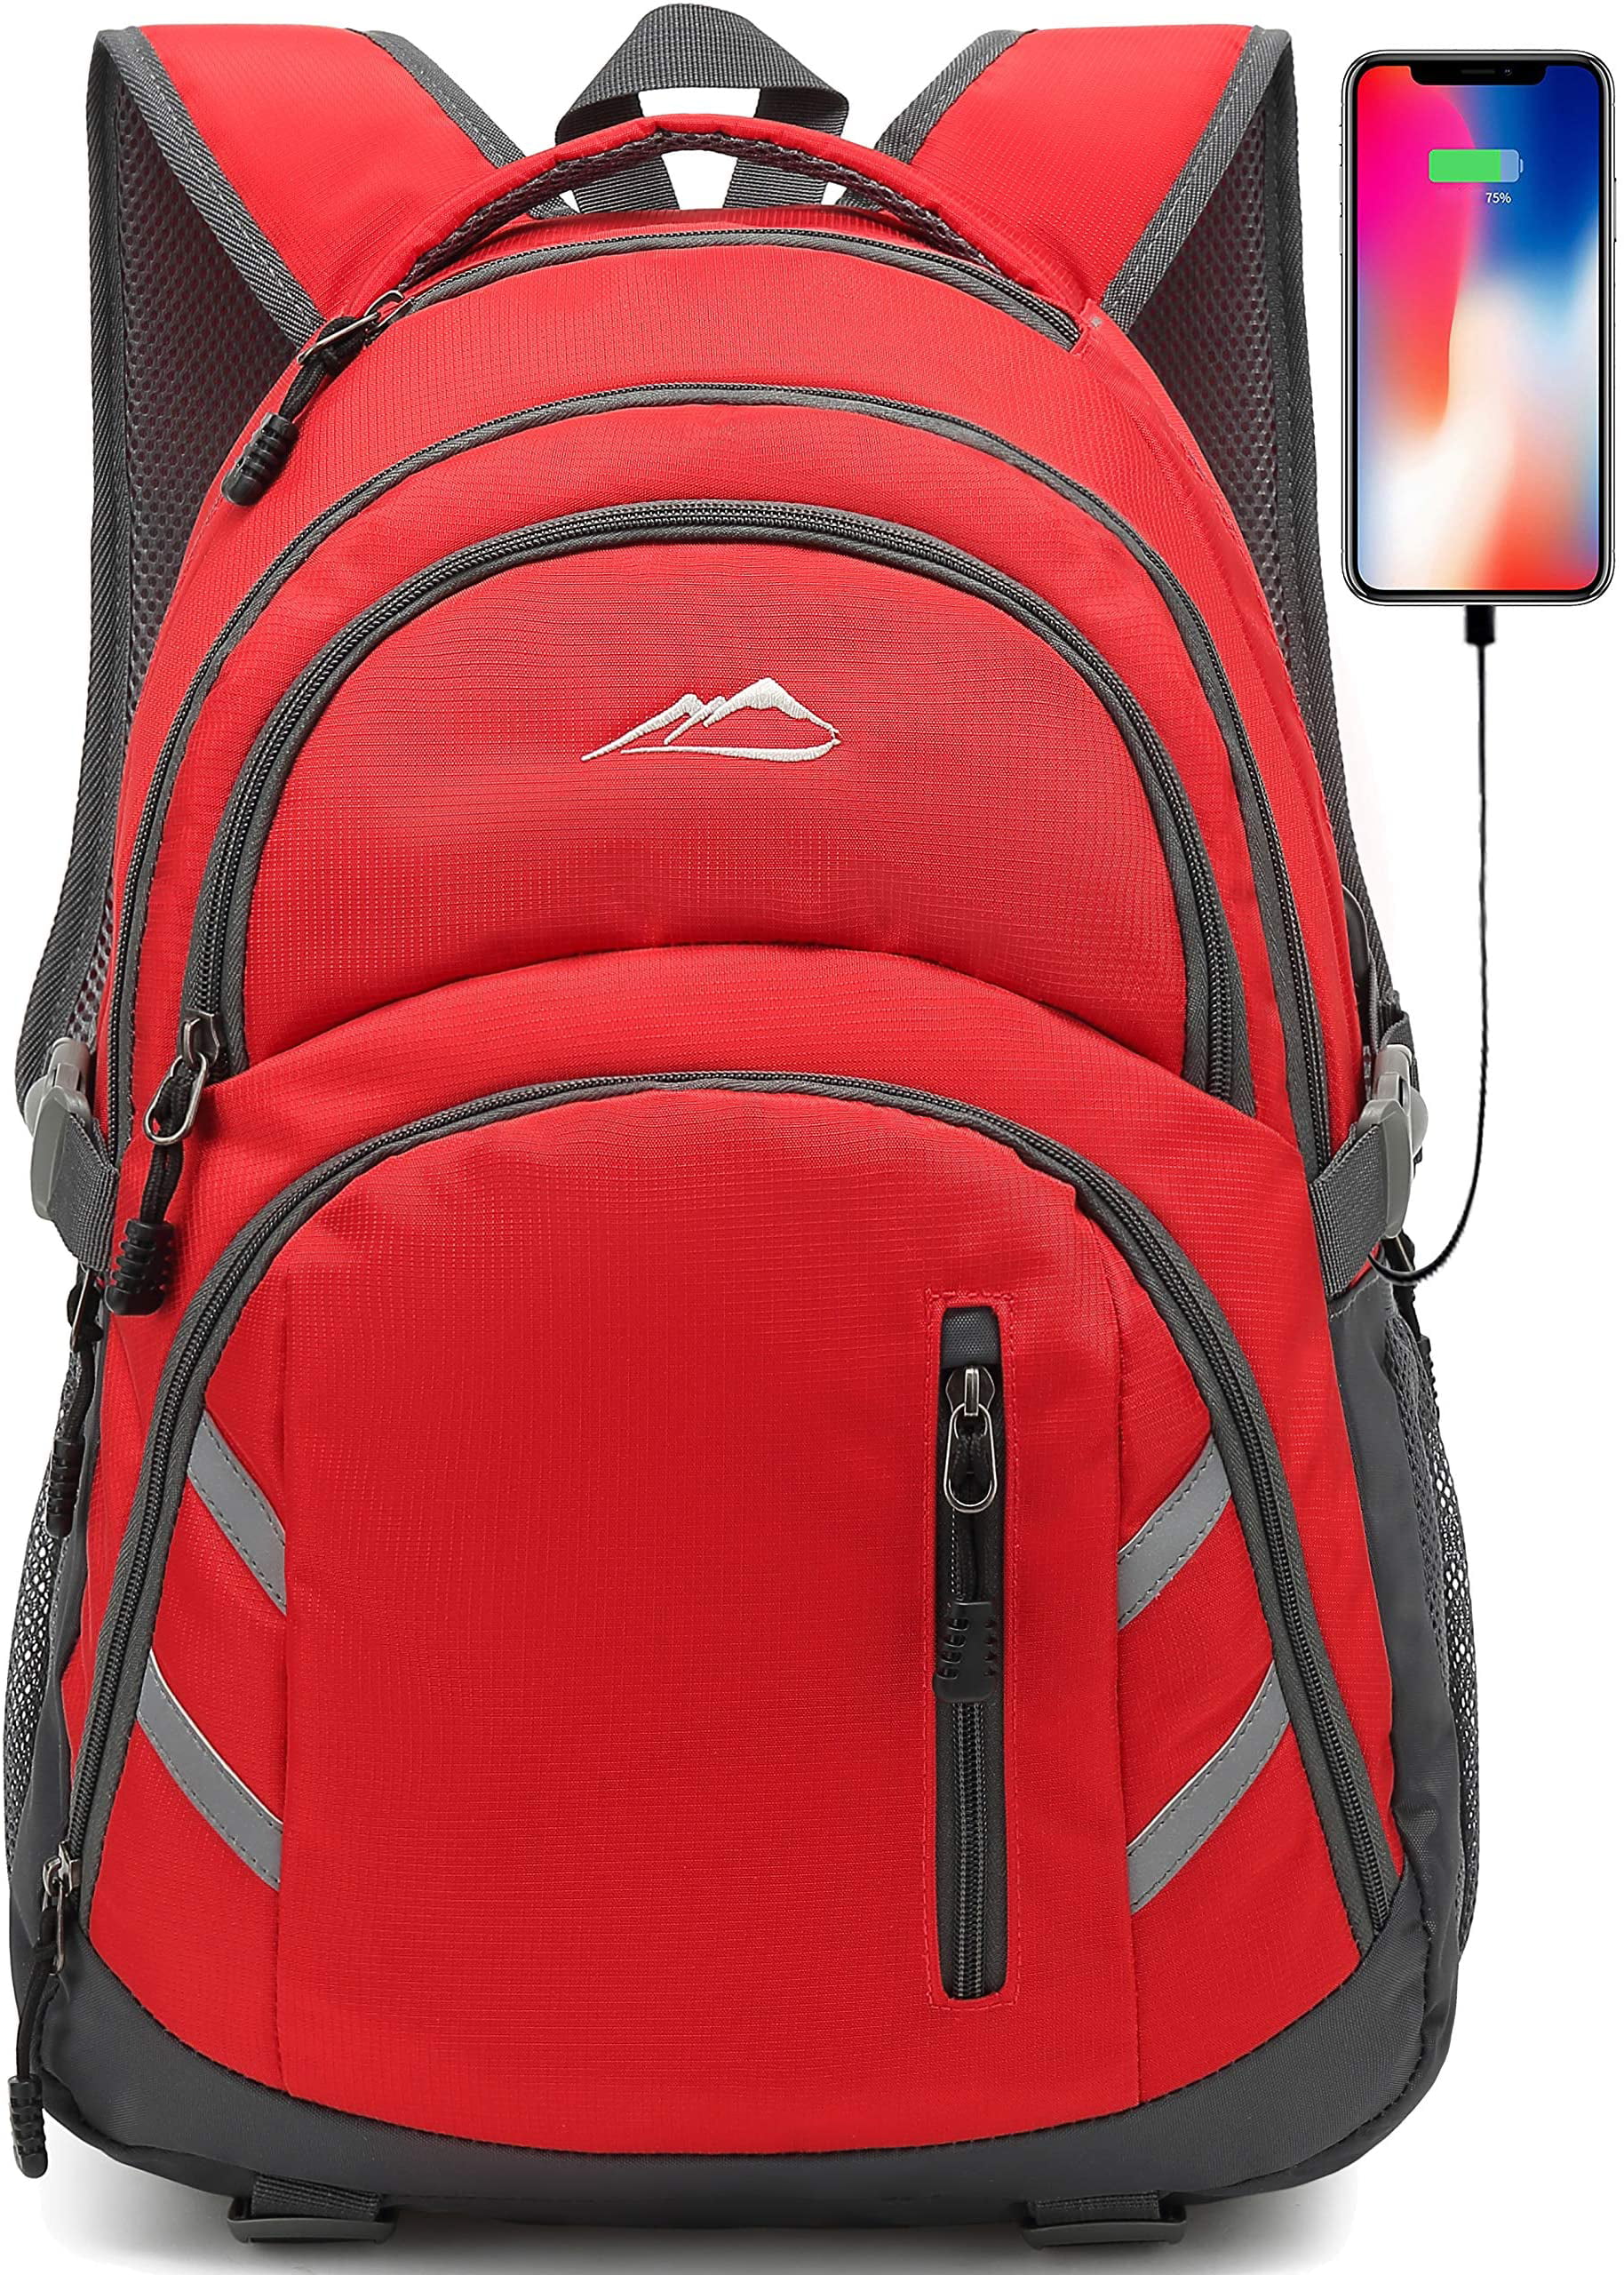 Travel Backpack Laptop Bag Love Expressions Fits for Computer Notebook Tablet Under 14 inch Business College School Adjustable Straps for Unisex Adult 